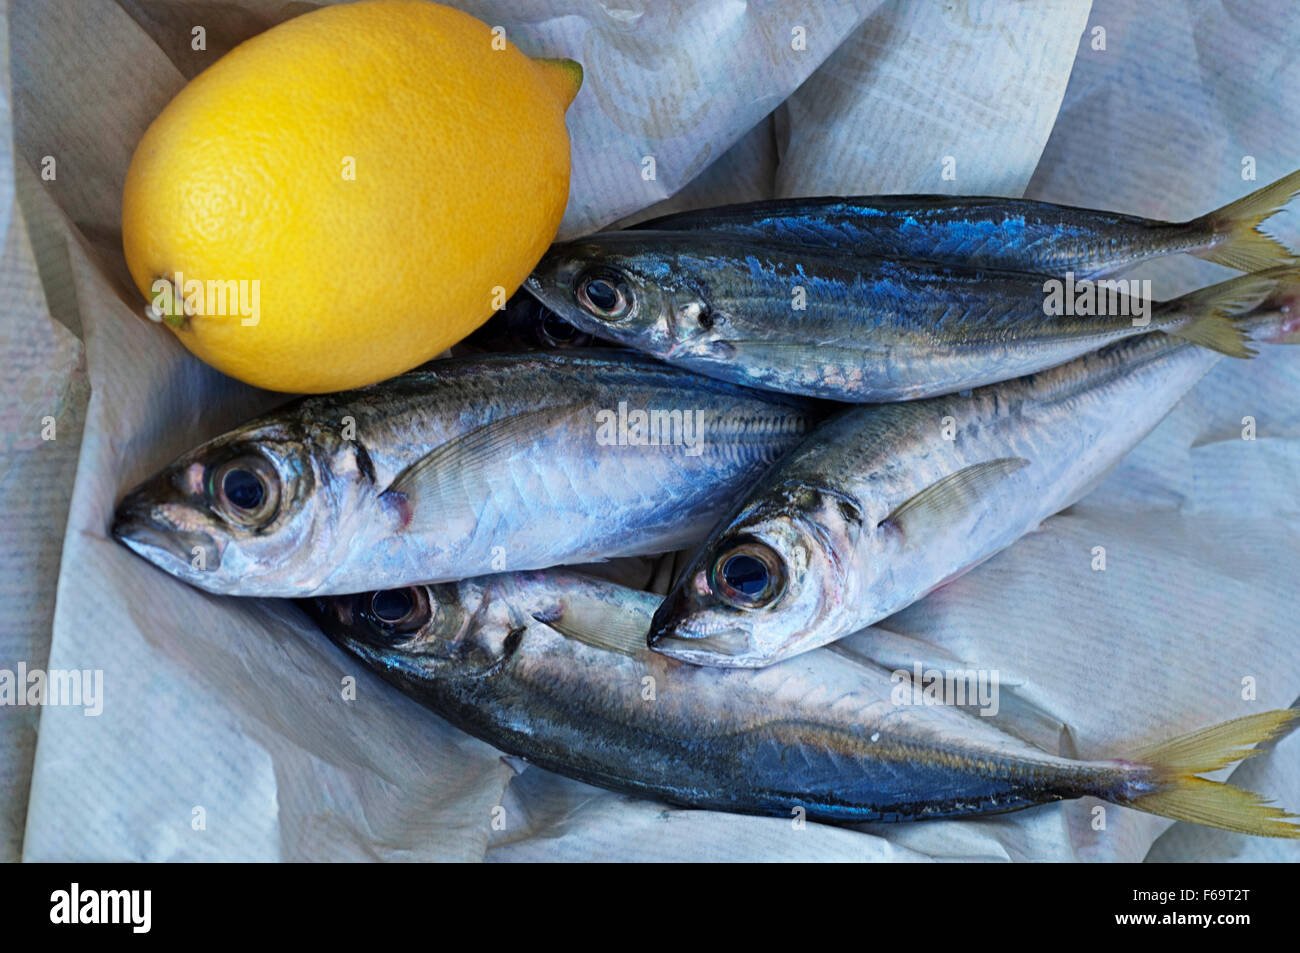 Freshly caught sardines with a lemon Stock Photo